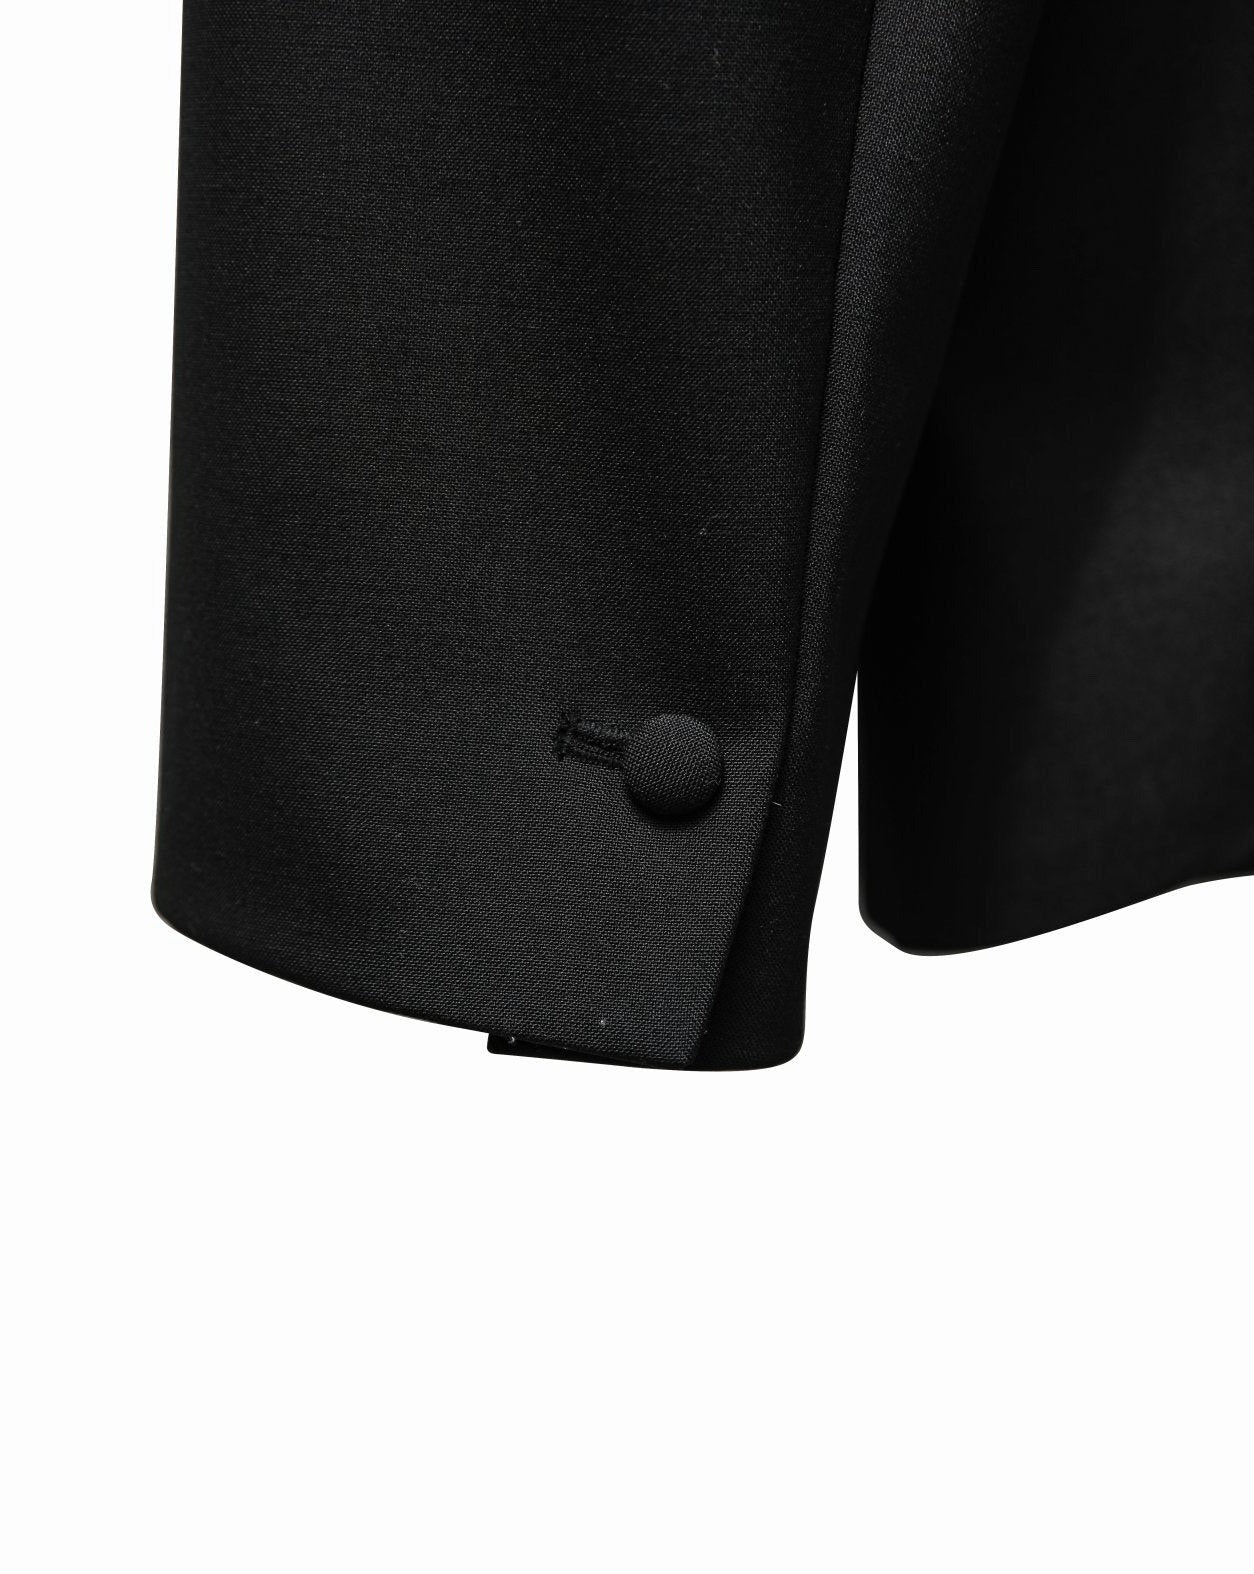 【PAPERMOON ペーパームーン】SS / Bi - Color Stitch Point Peaked Lapel Tuxedo Blazer